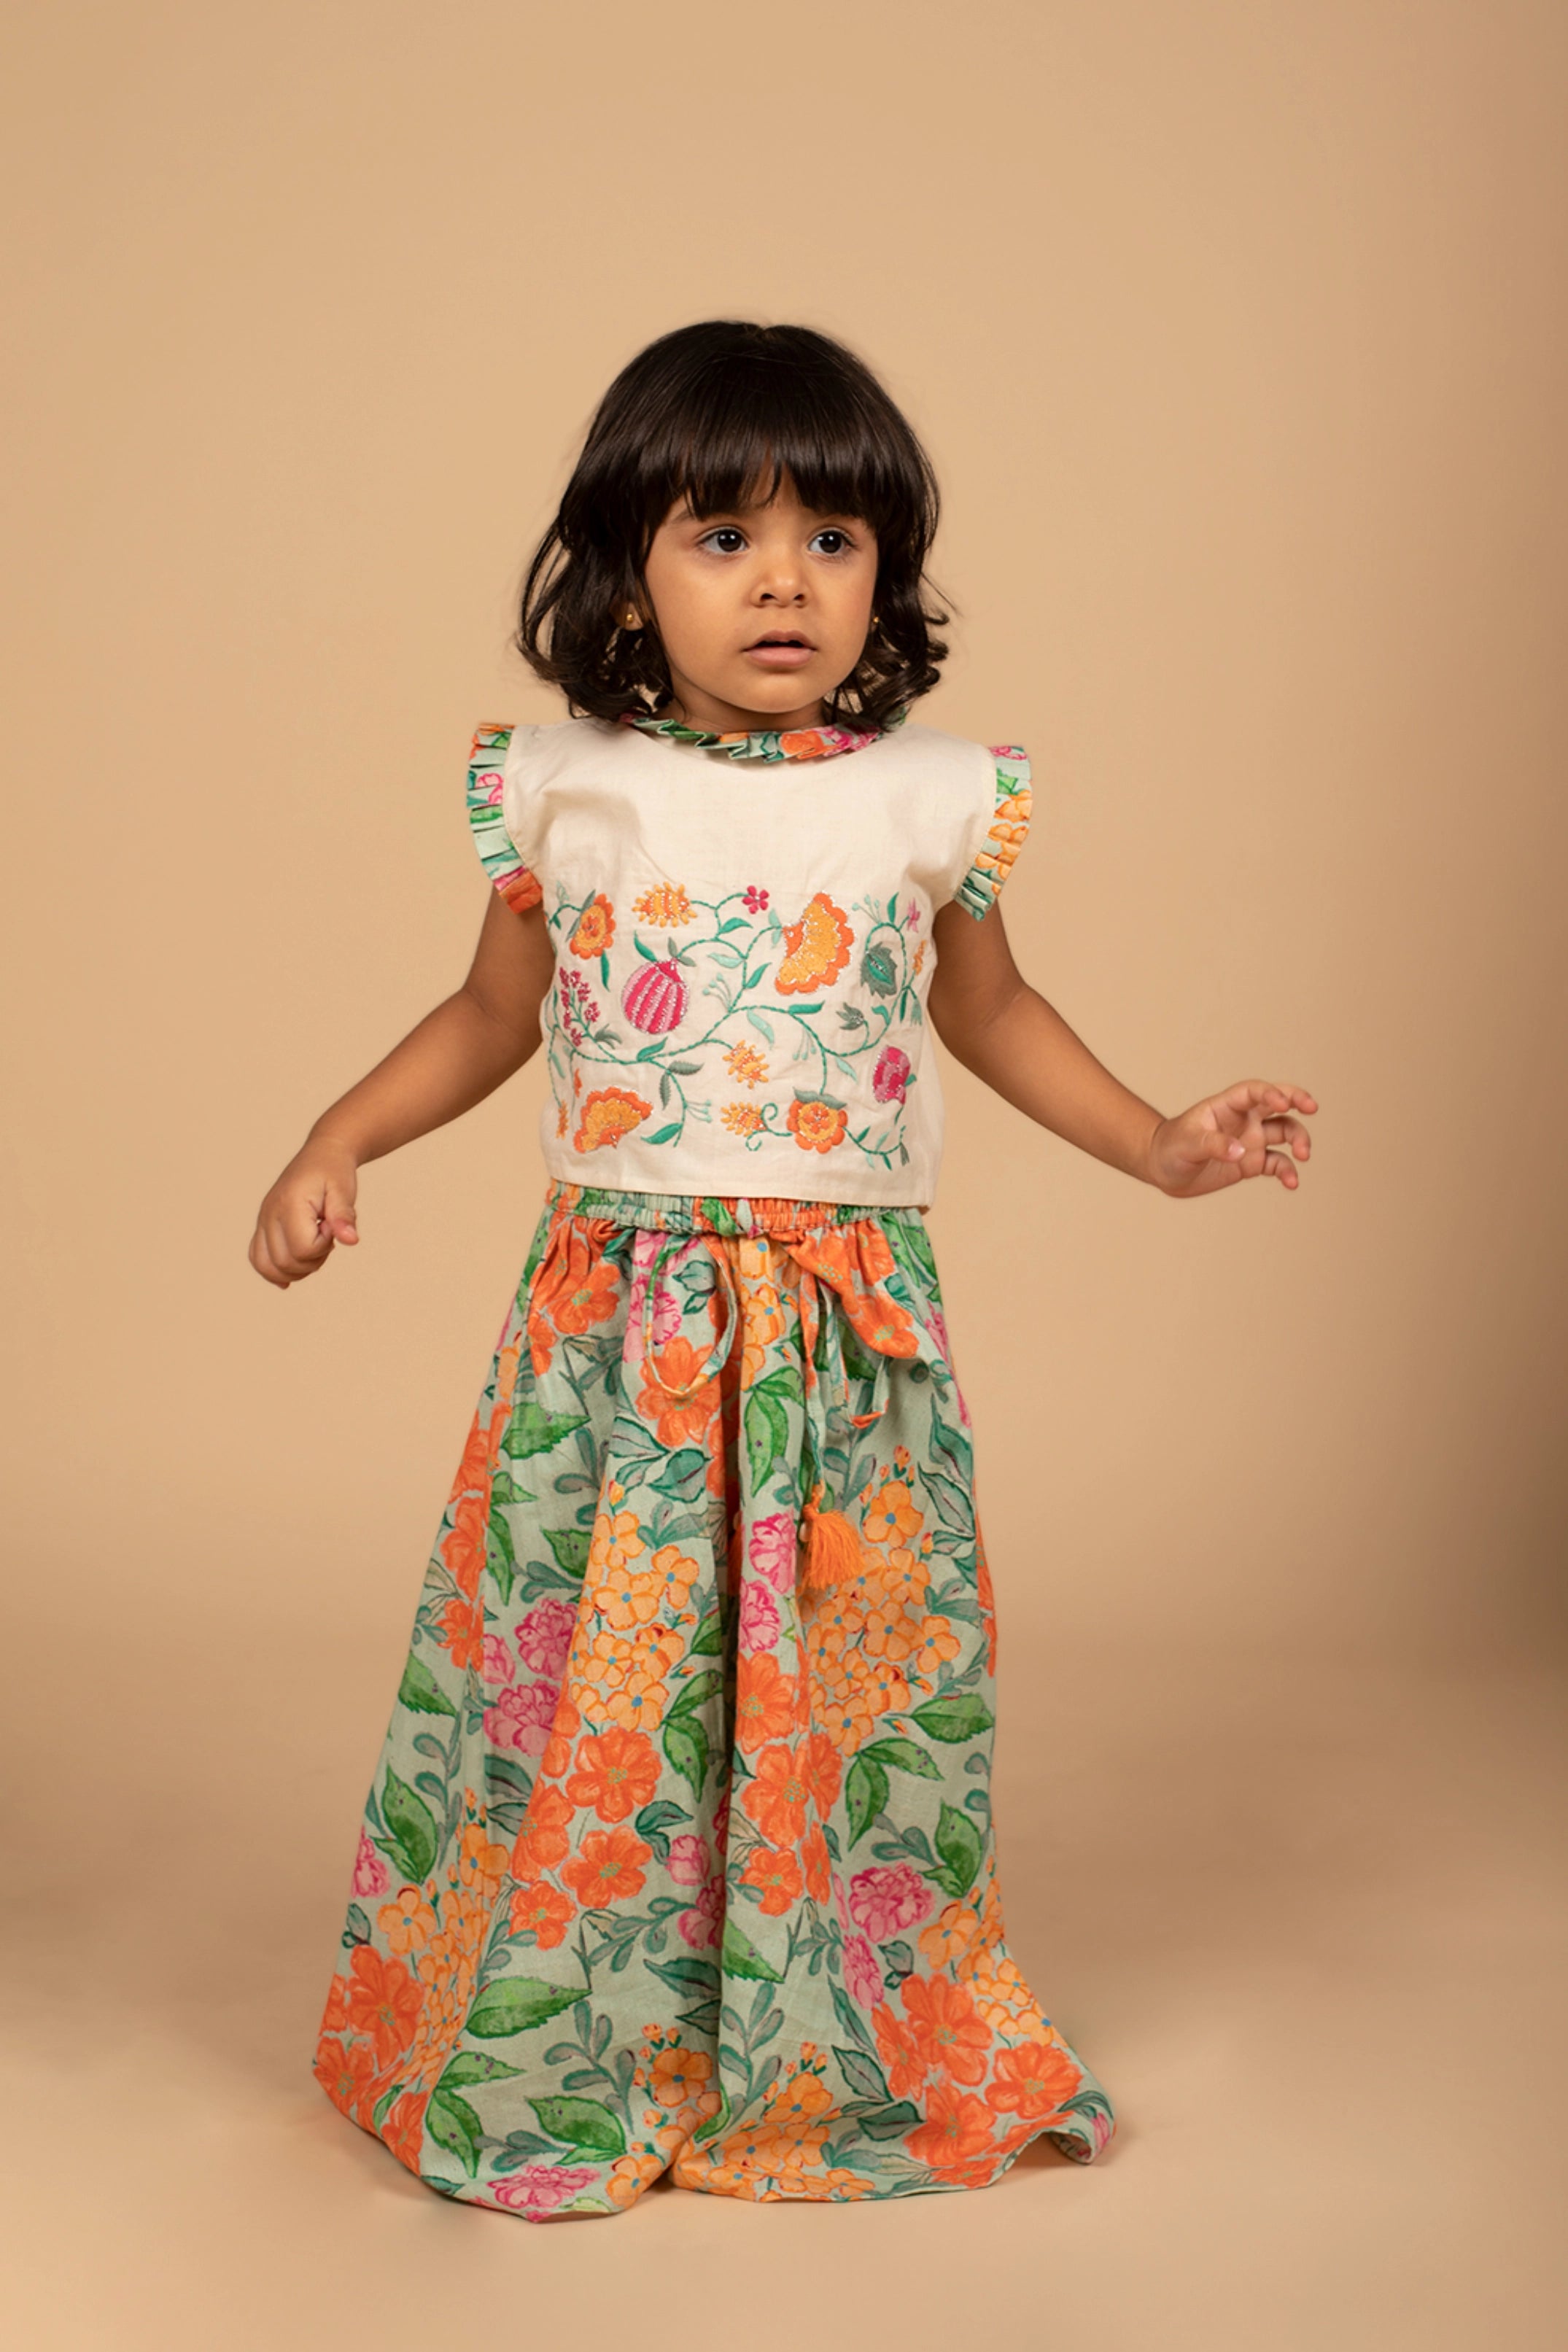 Girls Ethnic Wear Lehenga Choli, Birthday Outfits, Readymade Kids Lehenga  Choli | eBay